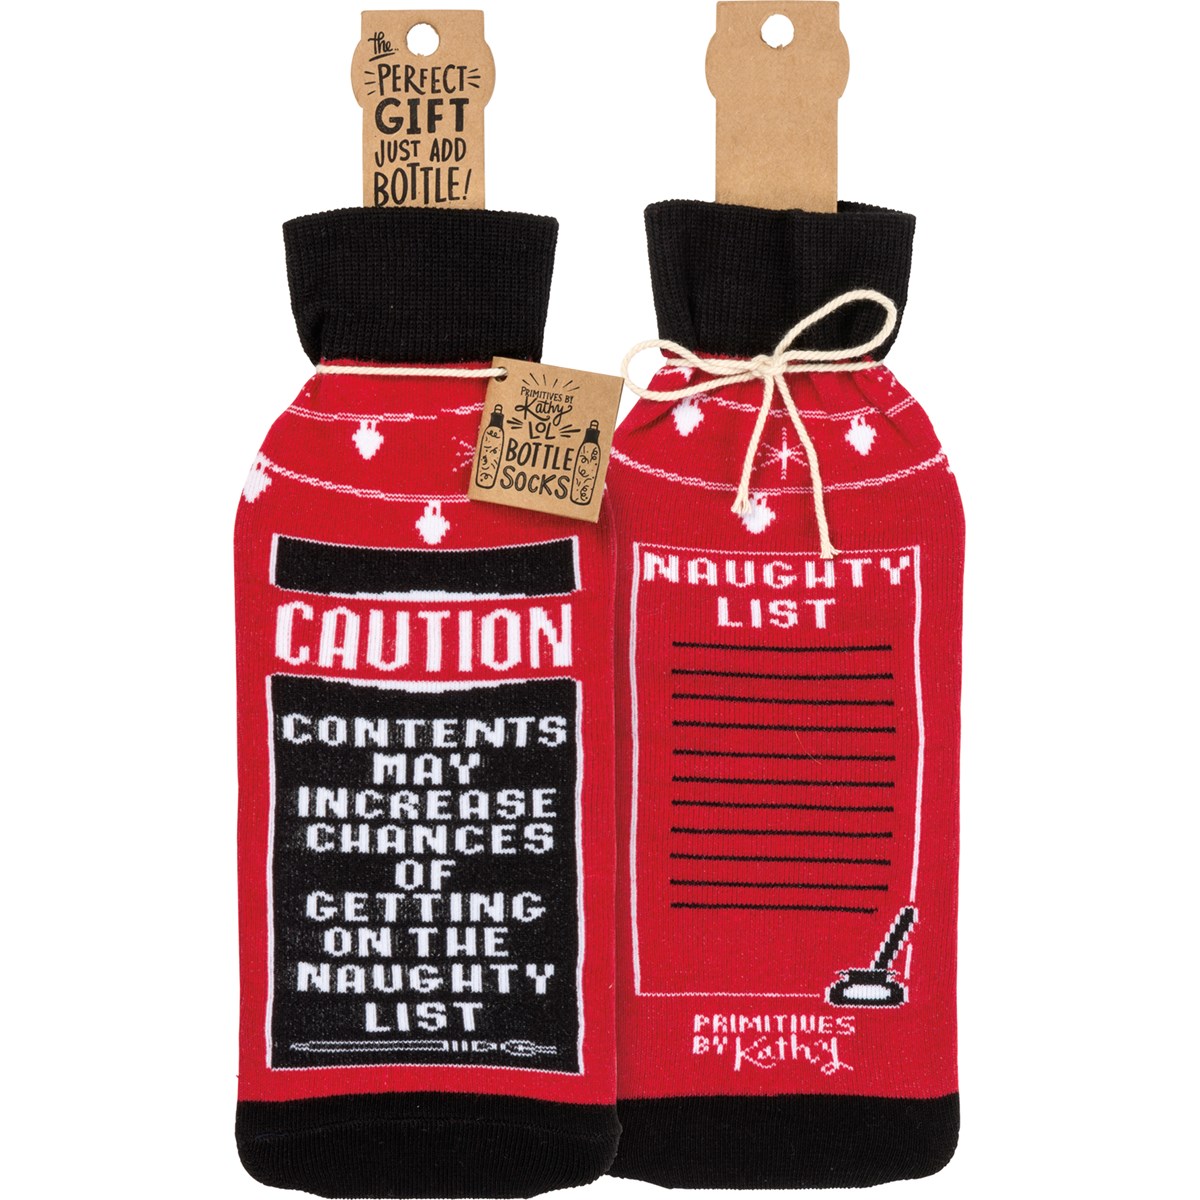 Naughty List Caution Bottle Sock - Cotton, Nylon, Spandex